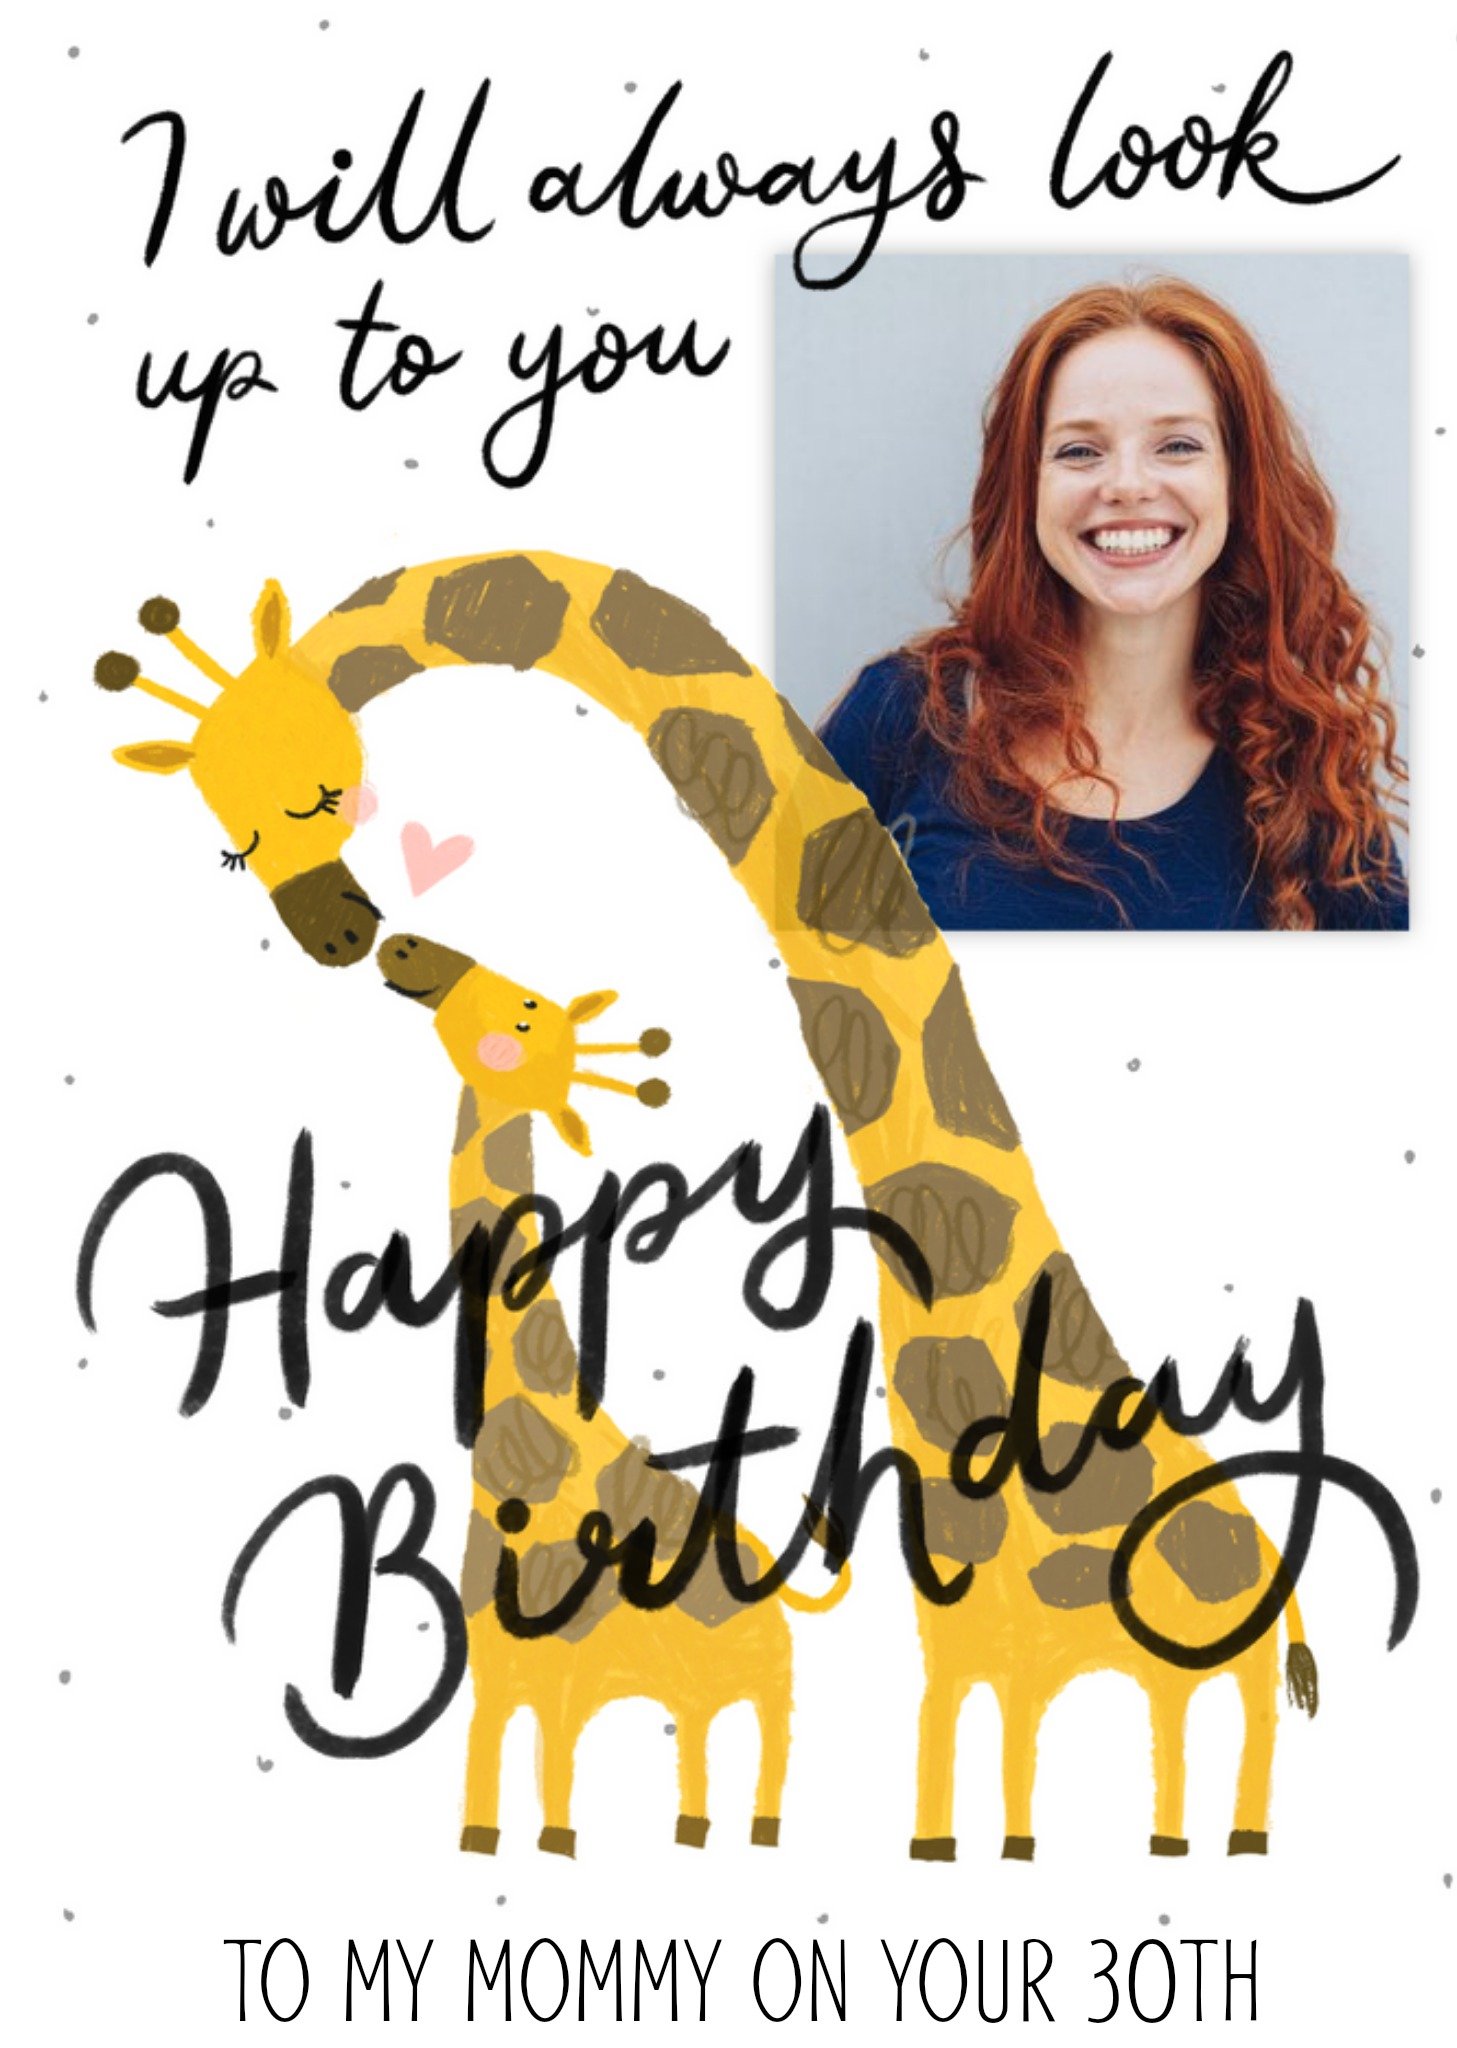 Okey Dokey Design Illustrated Giraffes Happy Birthday To My Mommy On Your 30th Photo Upload Card, La